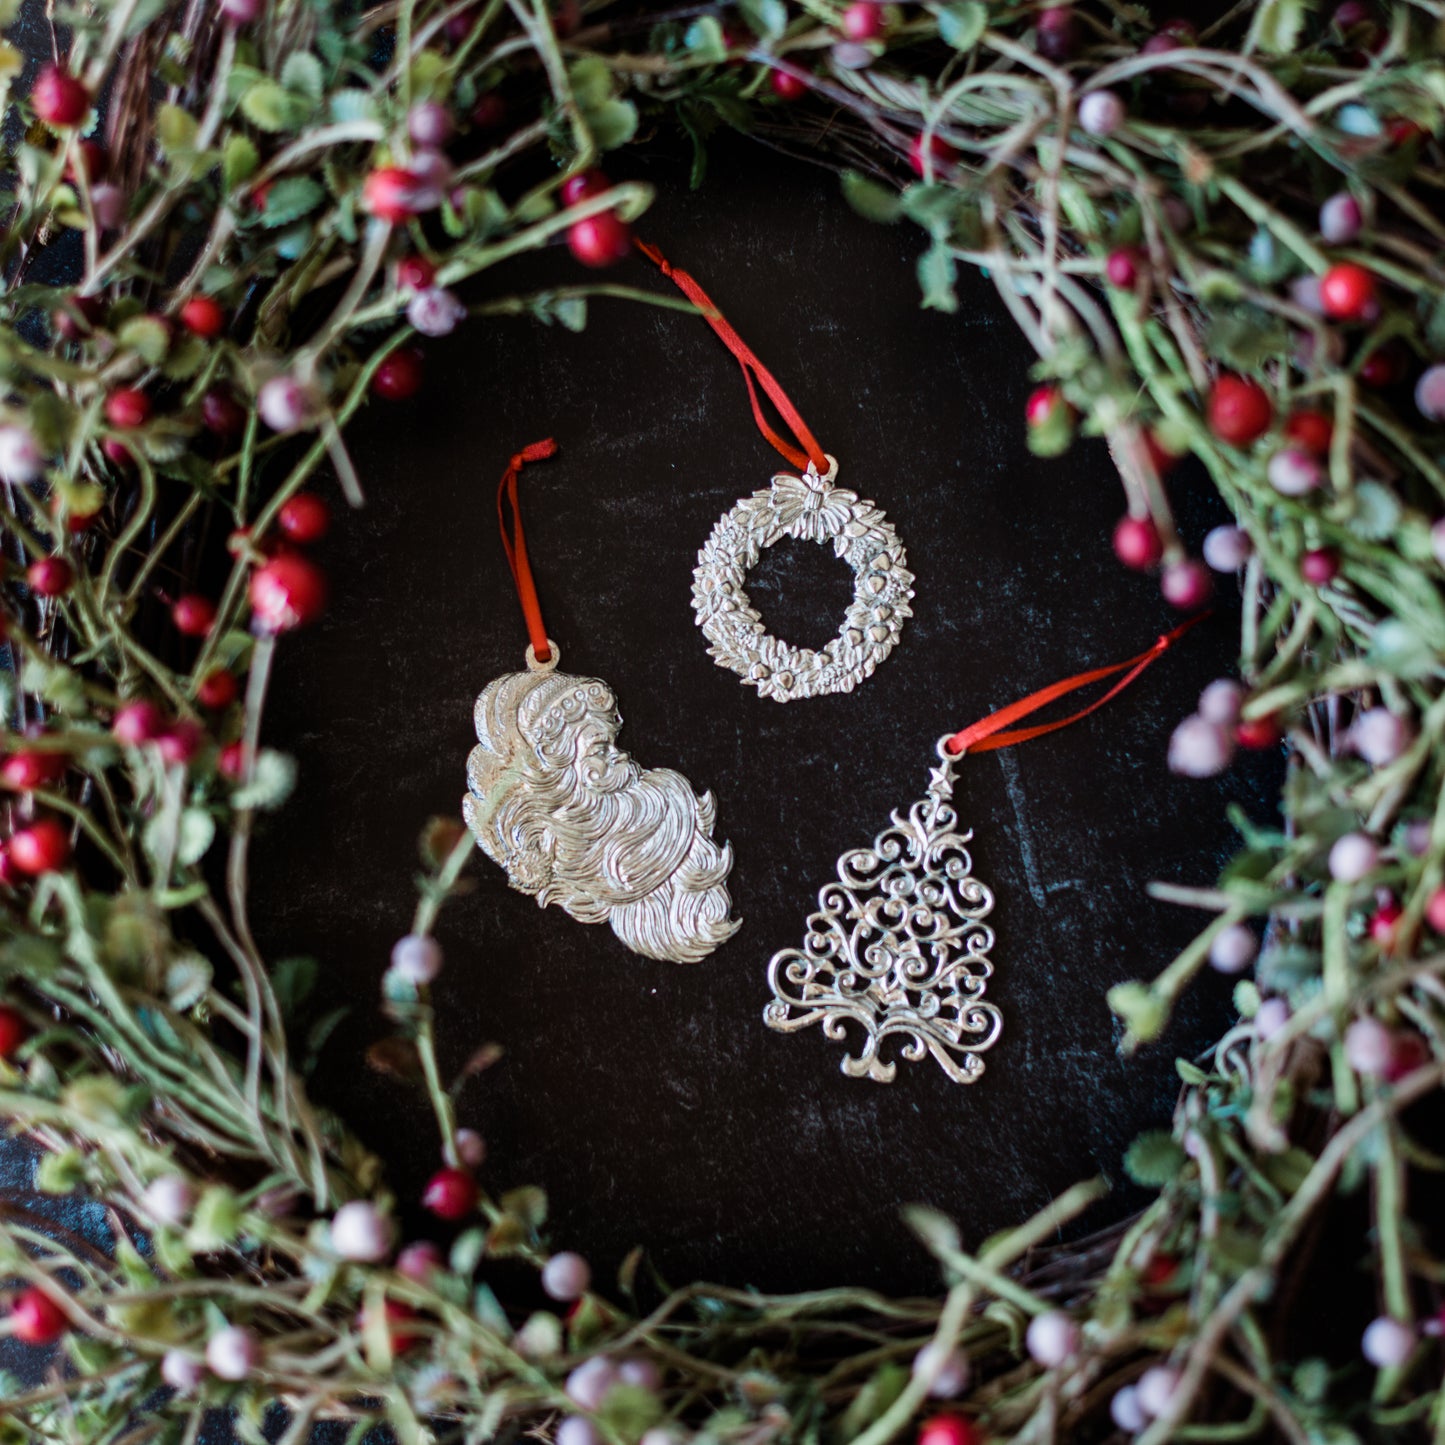 Vintage Christmas Ornament - Individual or Gift Set - Santa Face - Wreath - Christmas Tree